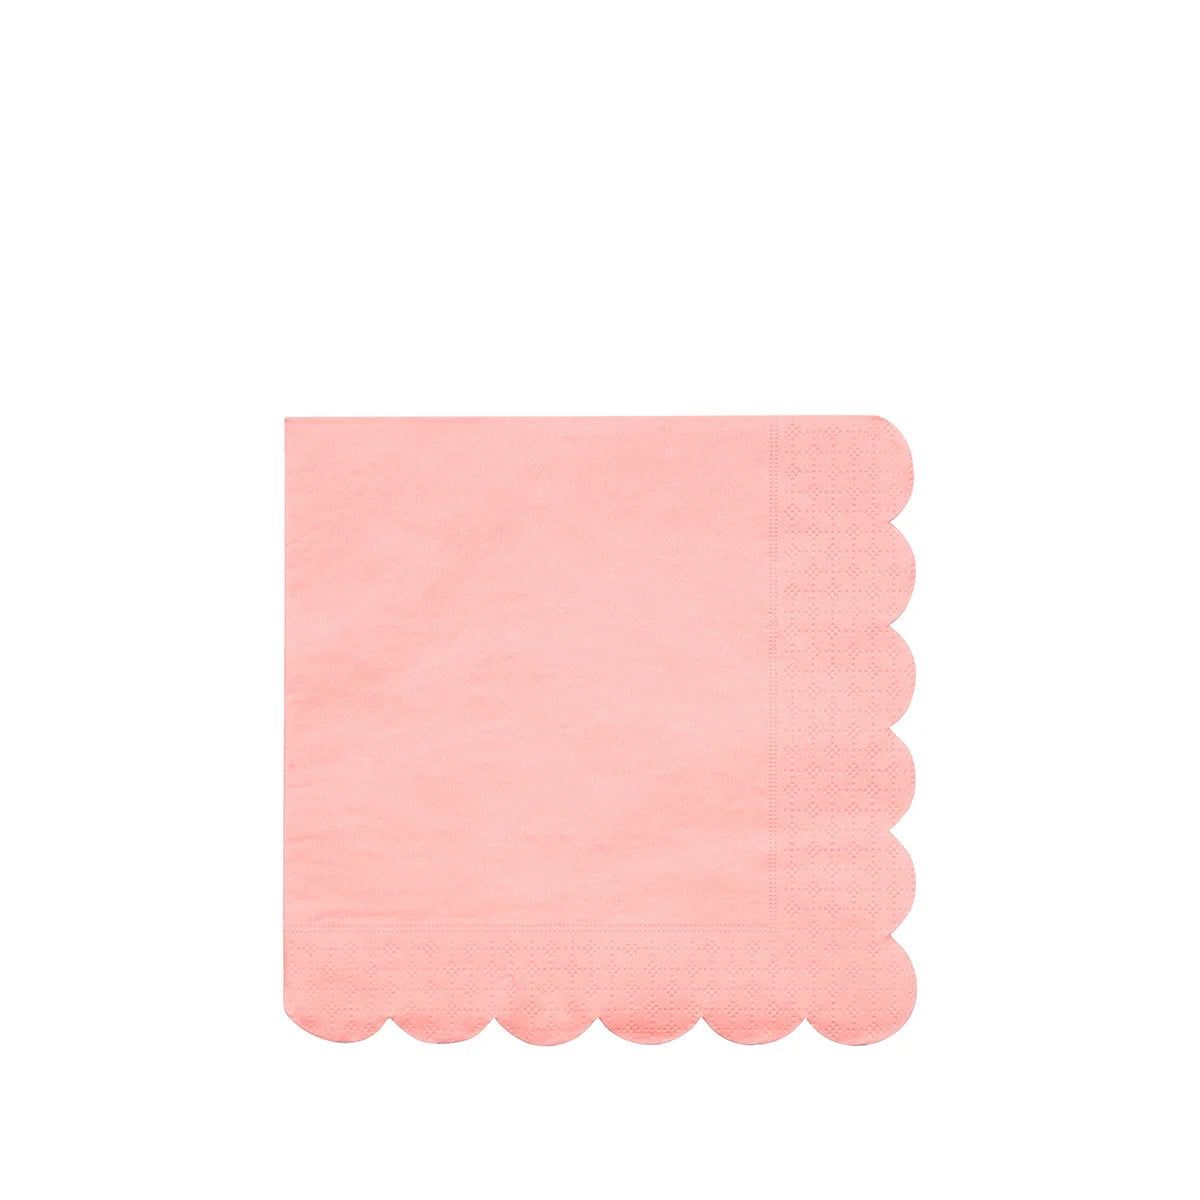 Large dark teal napkins